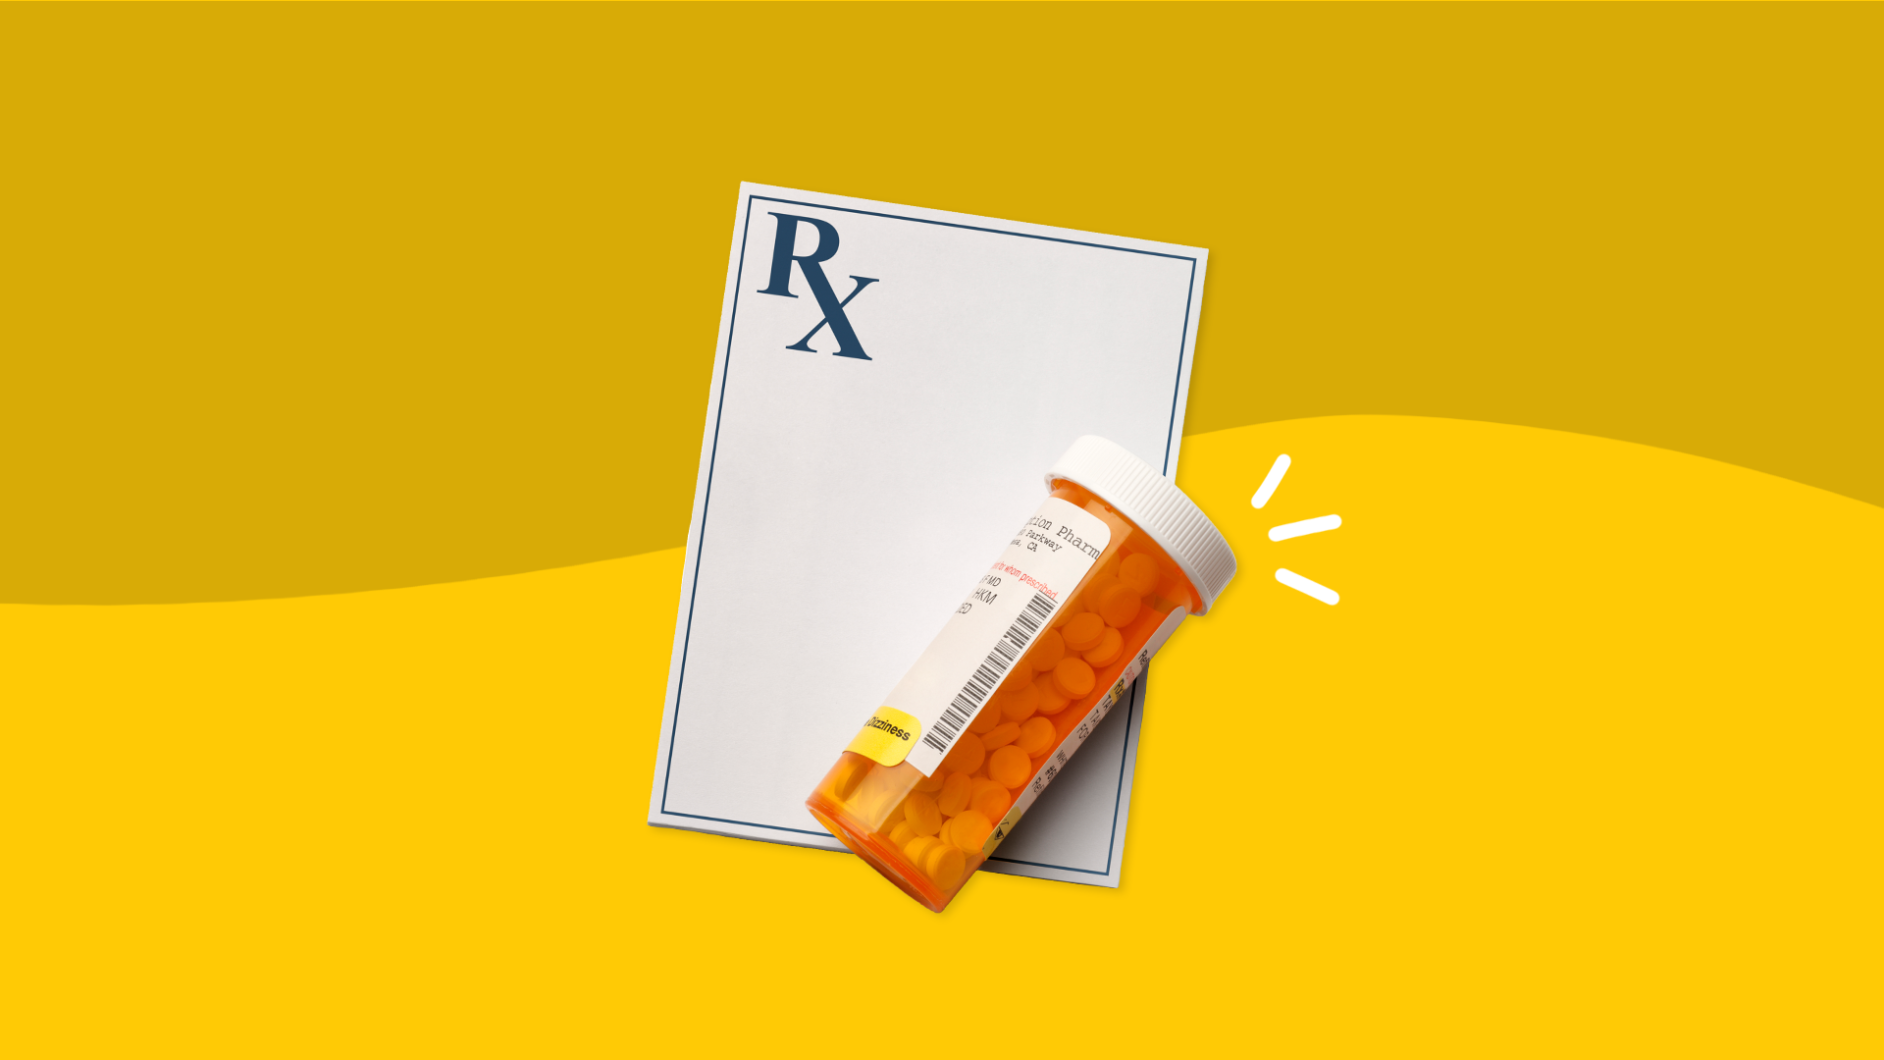 Prescription pad with pill bottle: Lamotrigine side effects